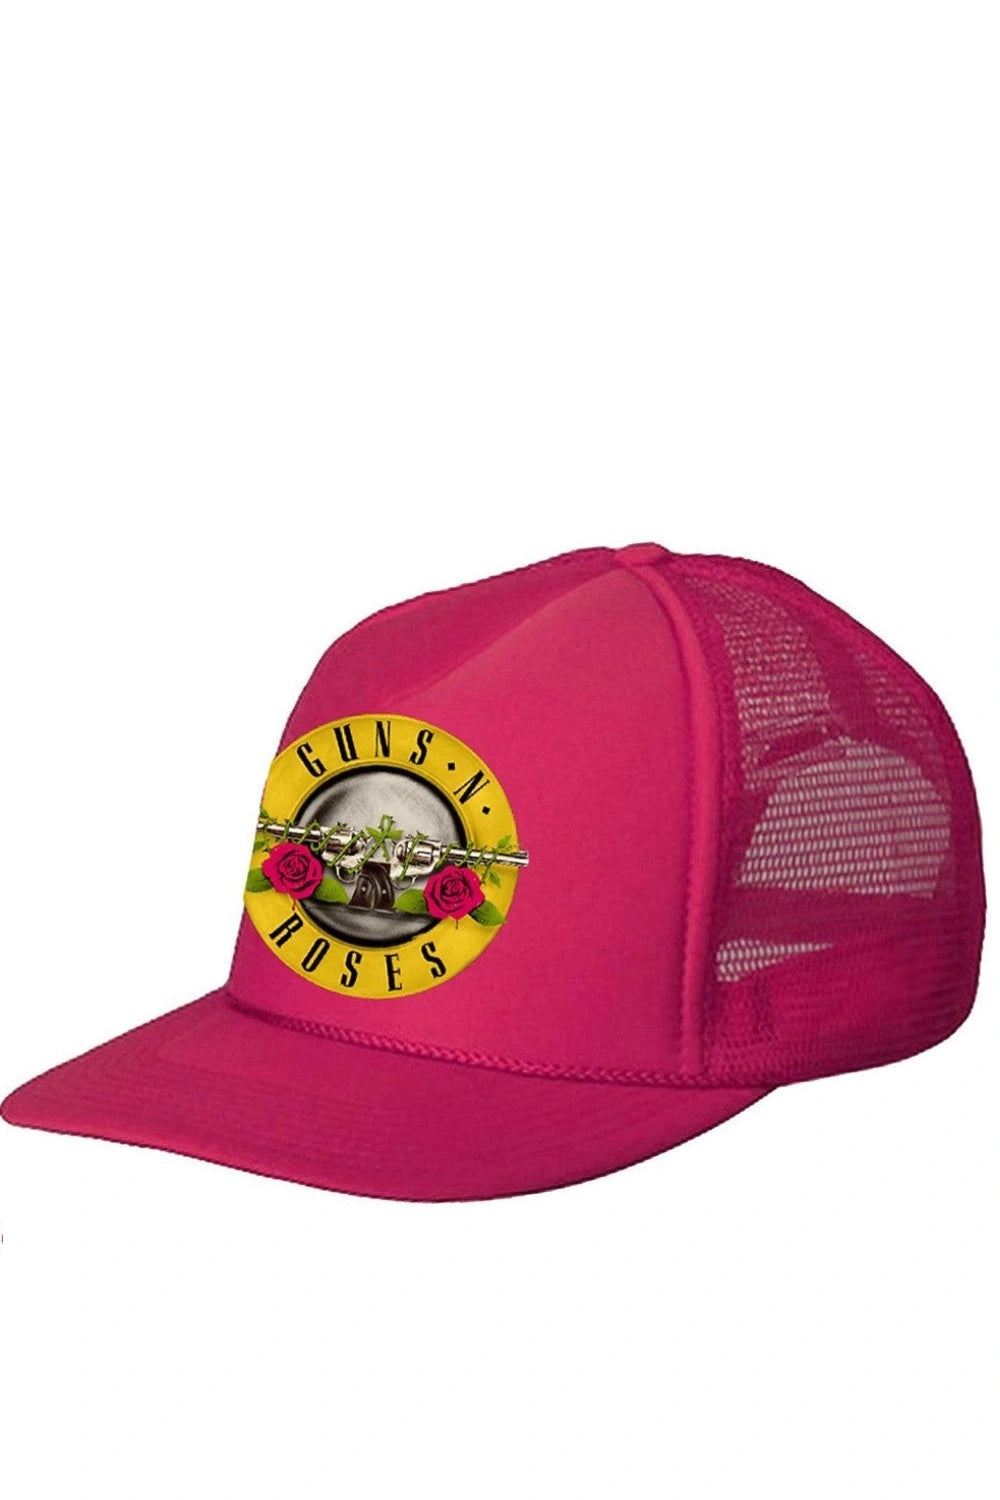 Guns N' Roses Unisex Mesh Back Cap: Classic Logo